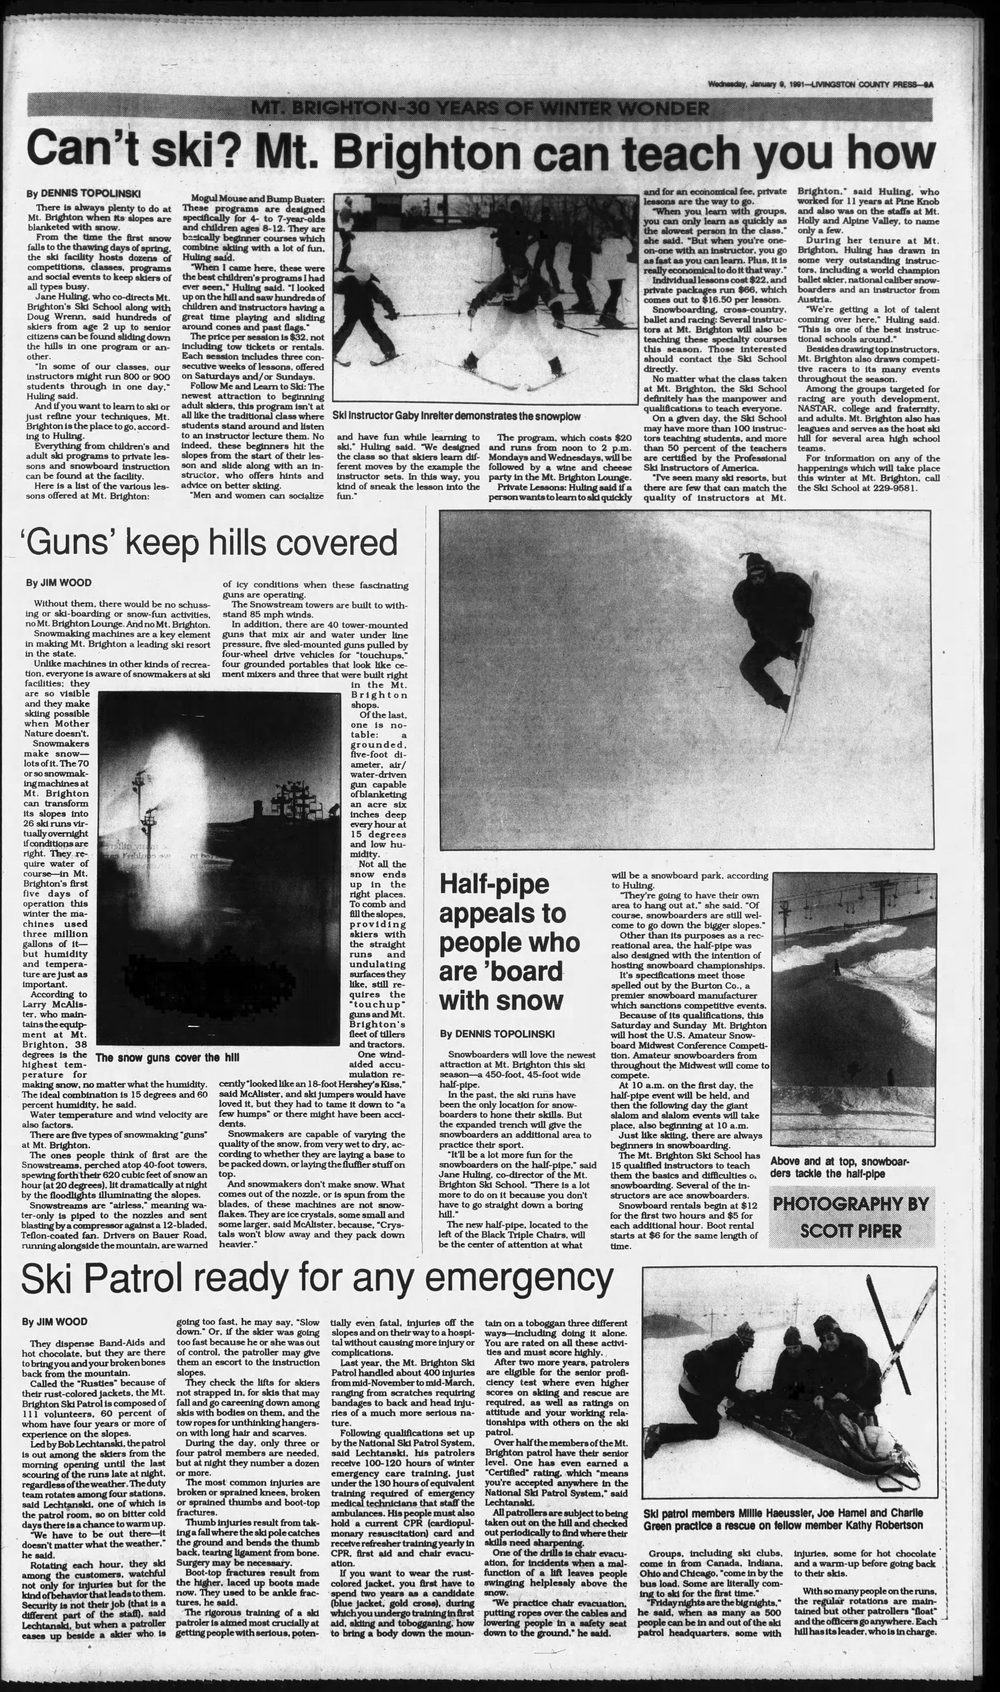 Mt. Brighton - 1991 Feature Article